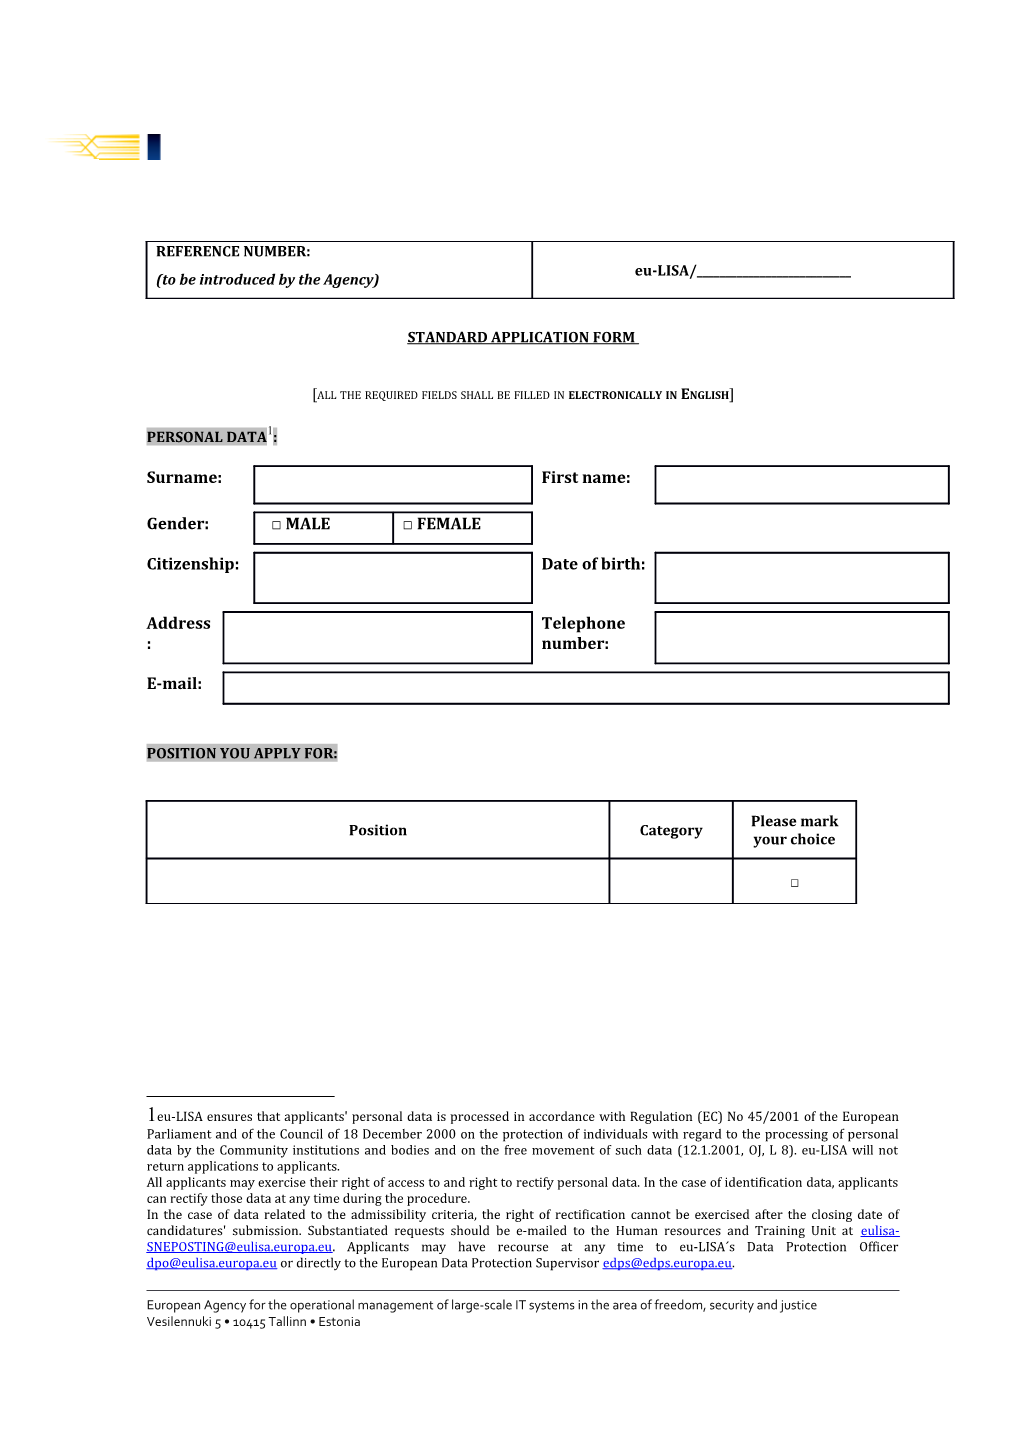 SNE Standard Application Form